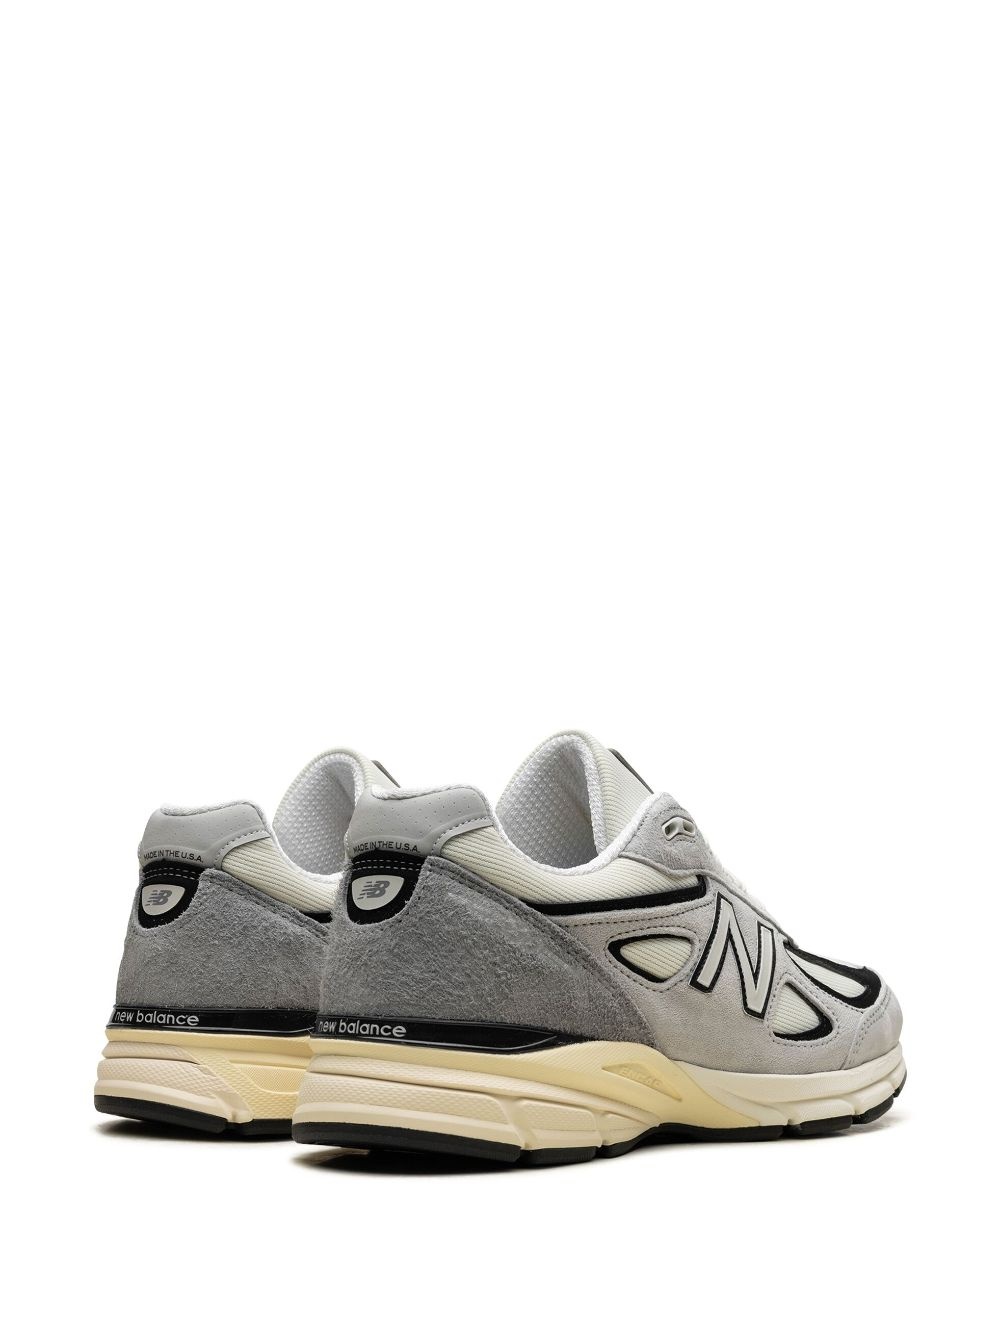 Made in USA 990v4 "Grey/Black" sneakers - 3